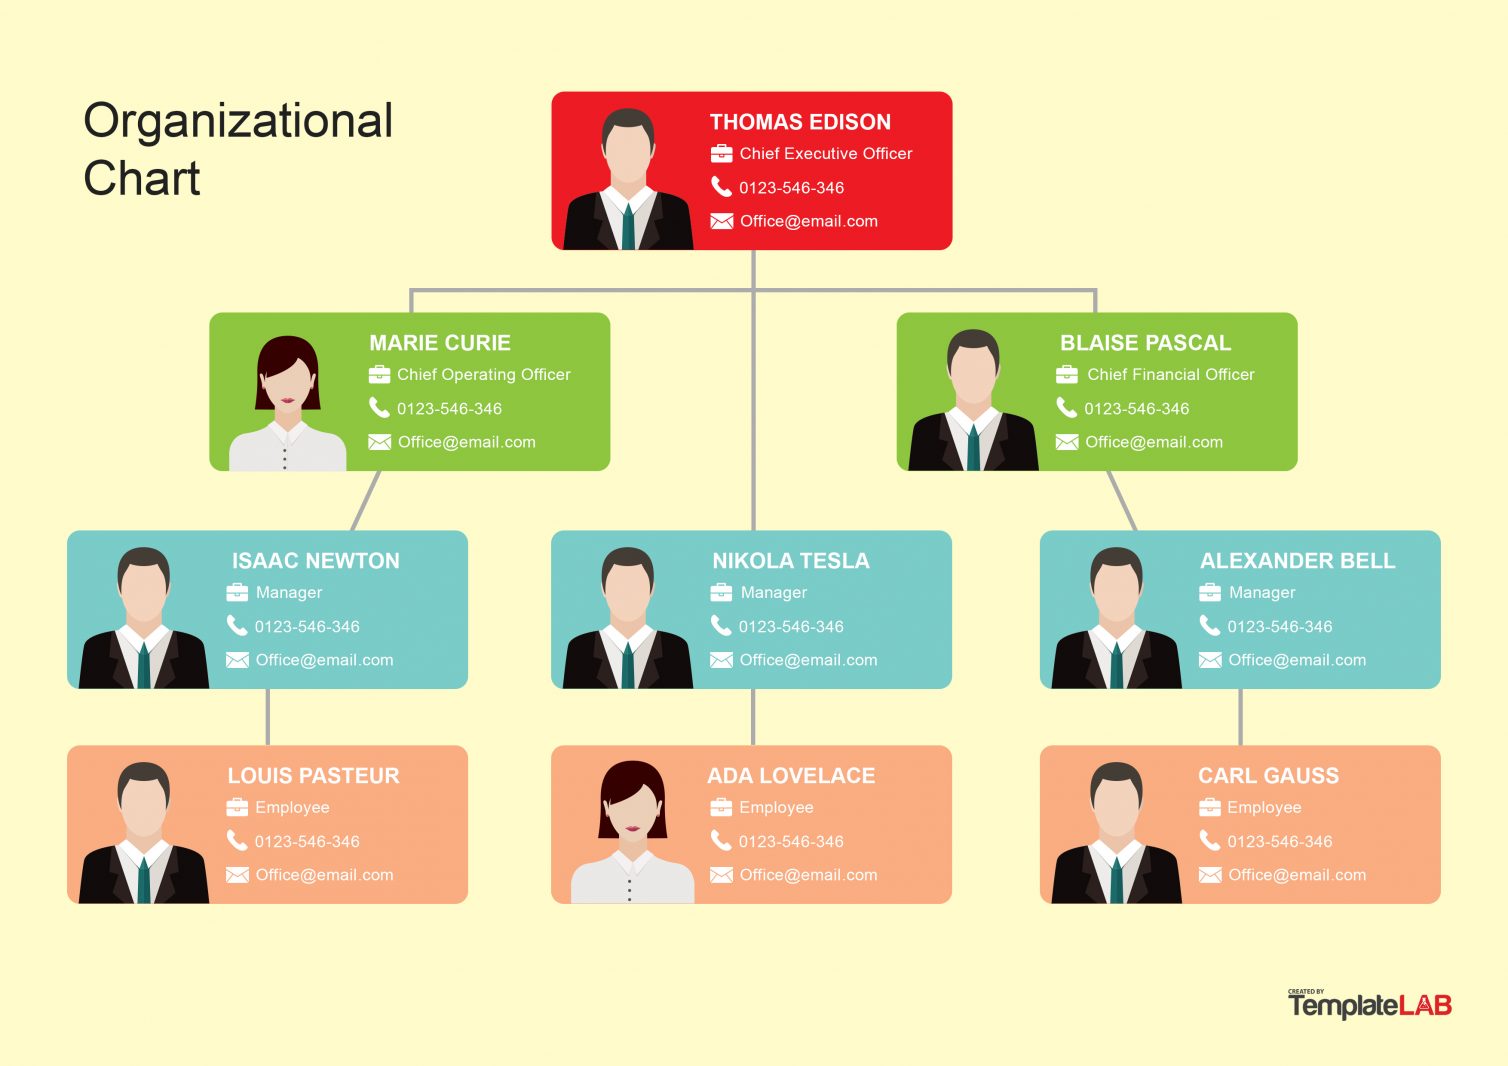 Organization Chart Design - Organizational Chart Template With Avatars For Powerpoint Slidemodel ...